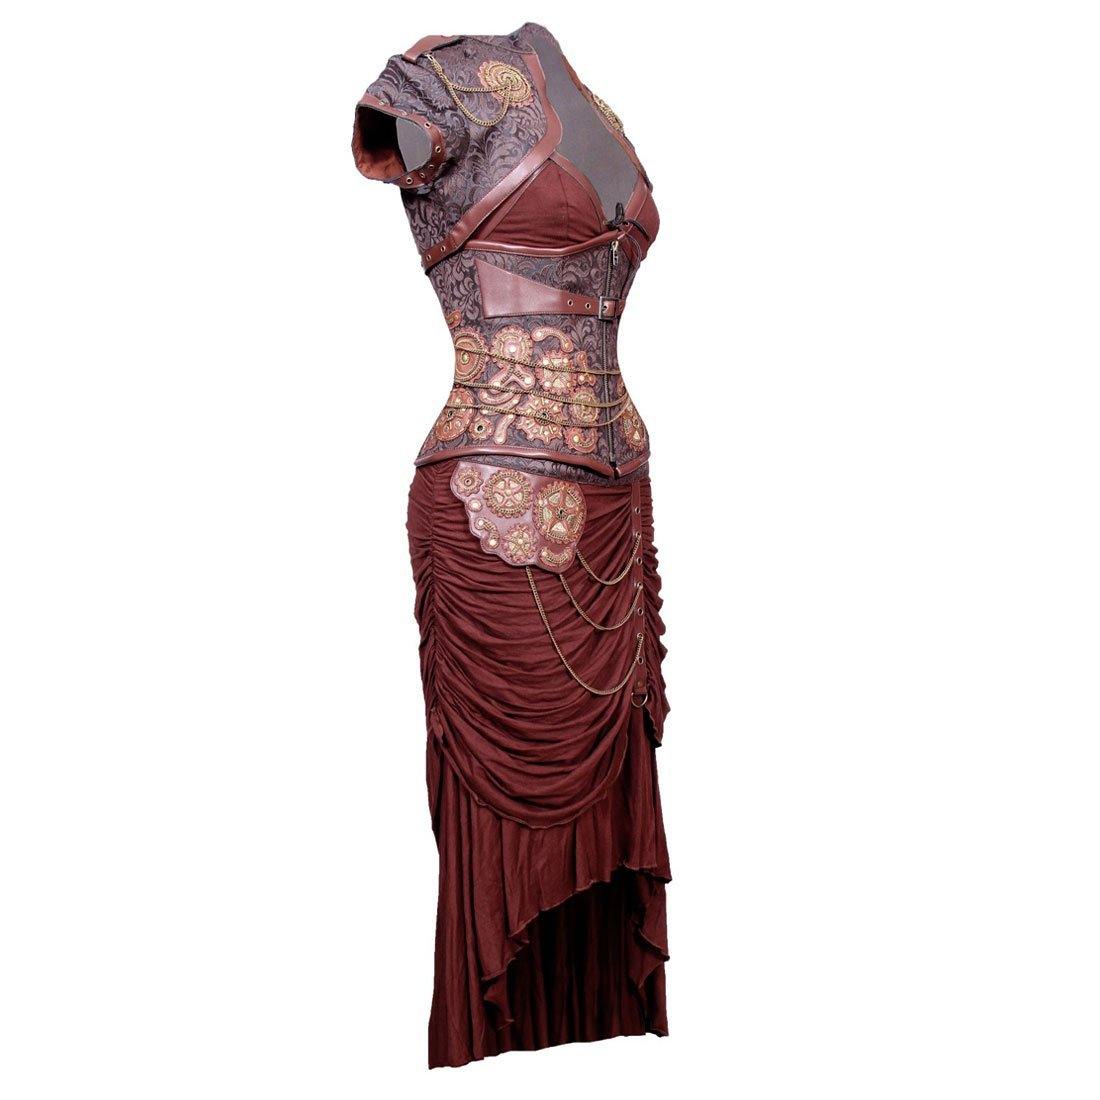 Rachel Steampunk Authentic Steel Boned Underbust Corset Dress - Corset Revolution